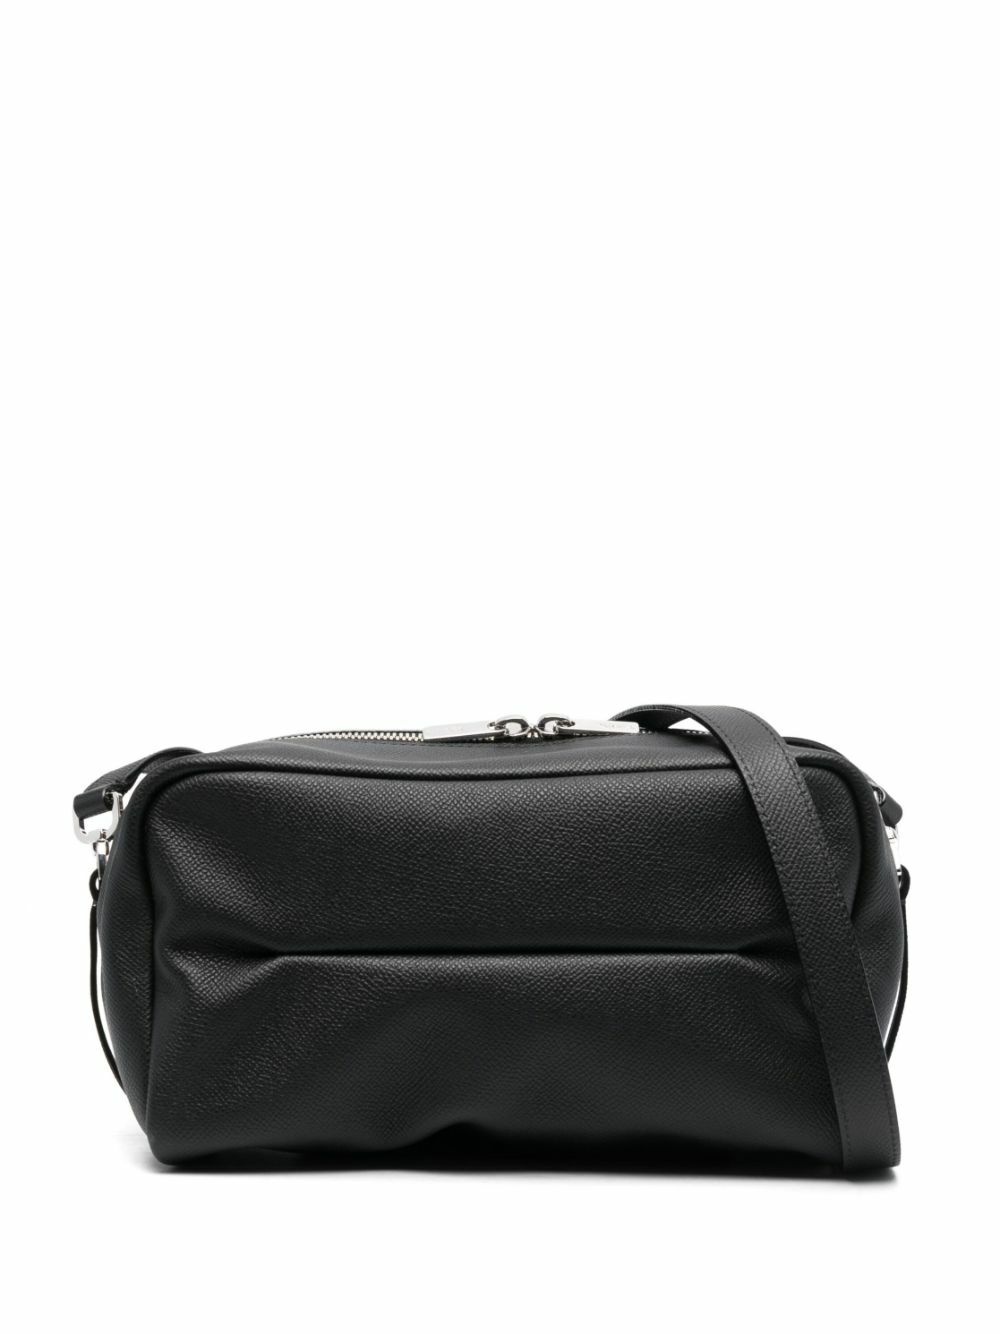 VALEXTRA - Foldable Leather Travel Bag Valextra